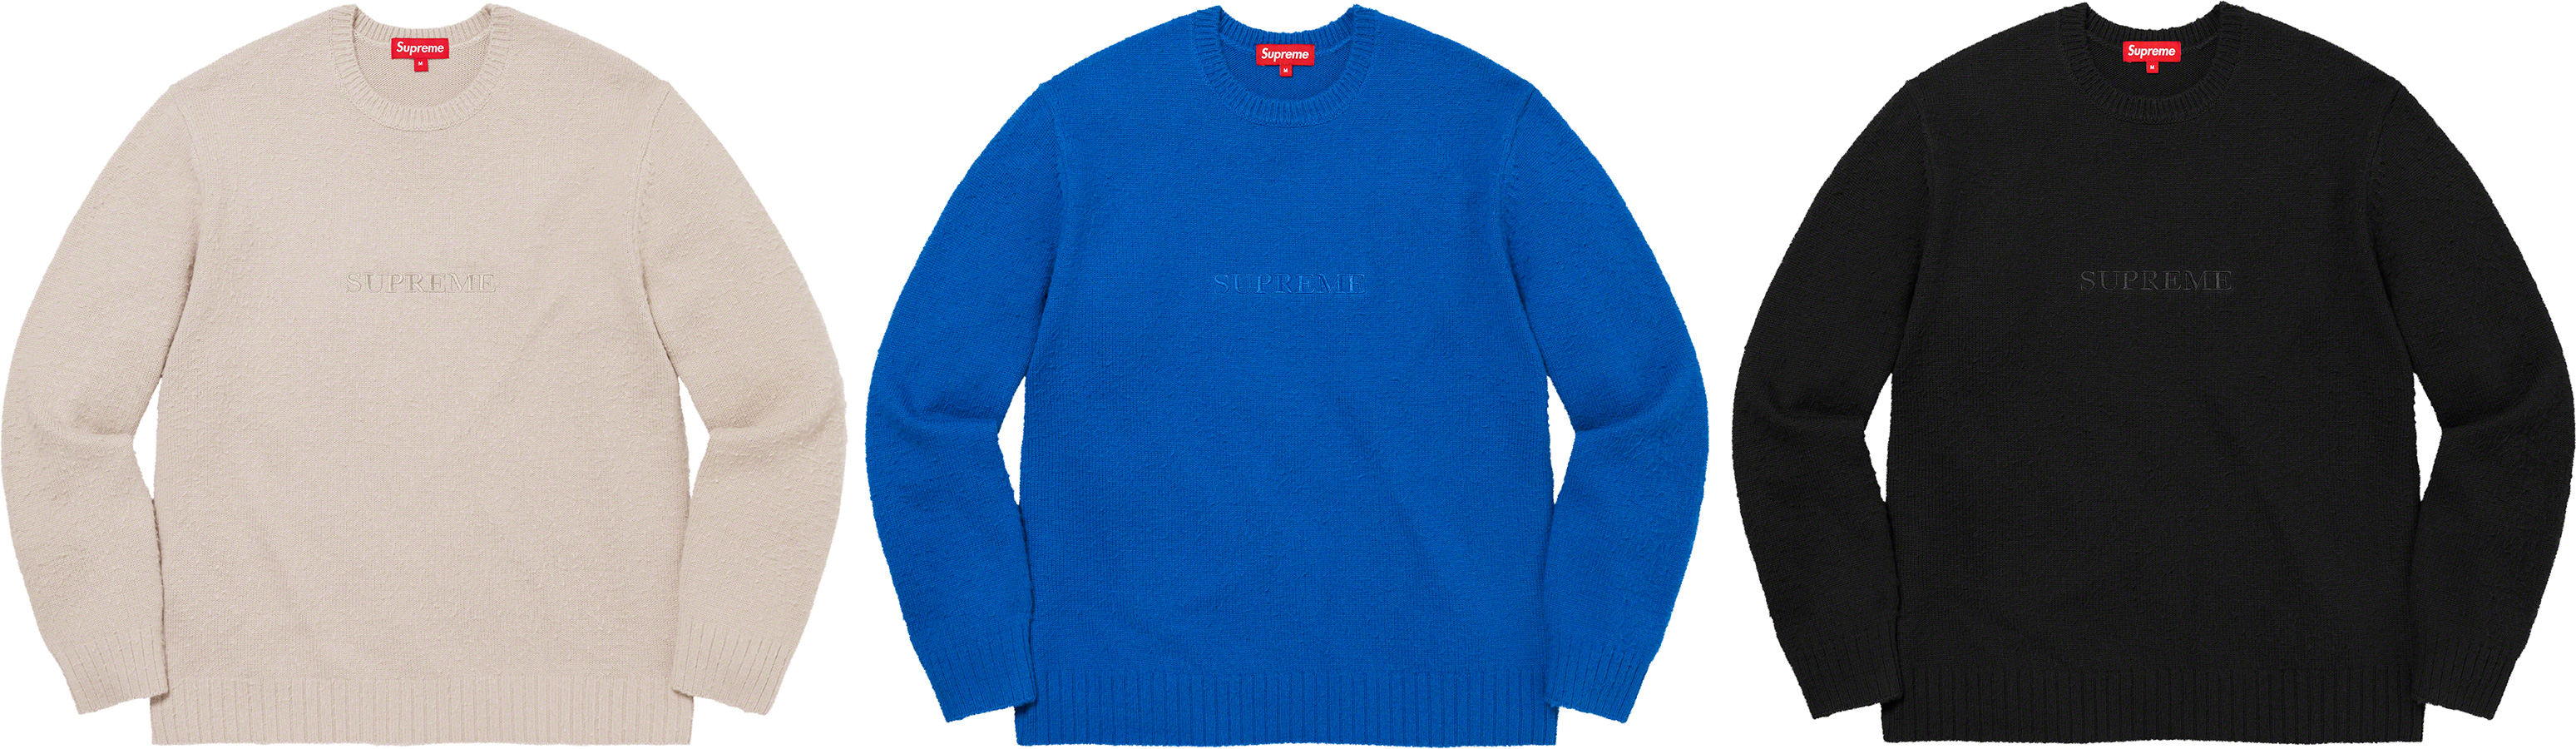 Pilled Sweater - fall winter 2021 - Supreme